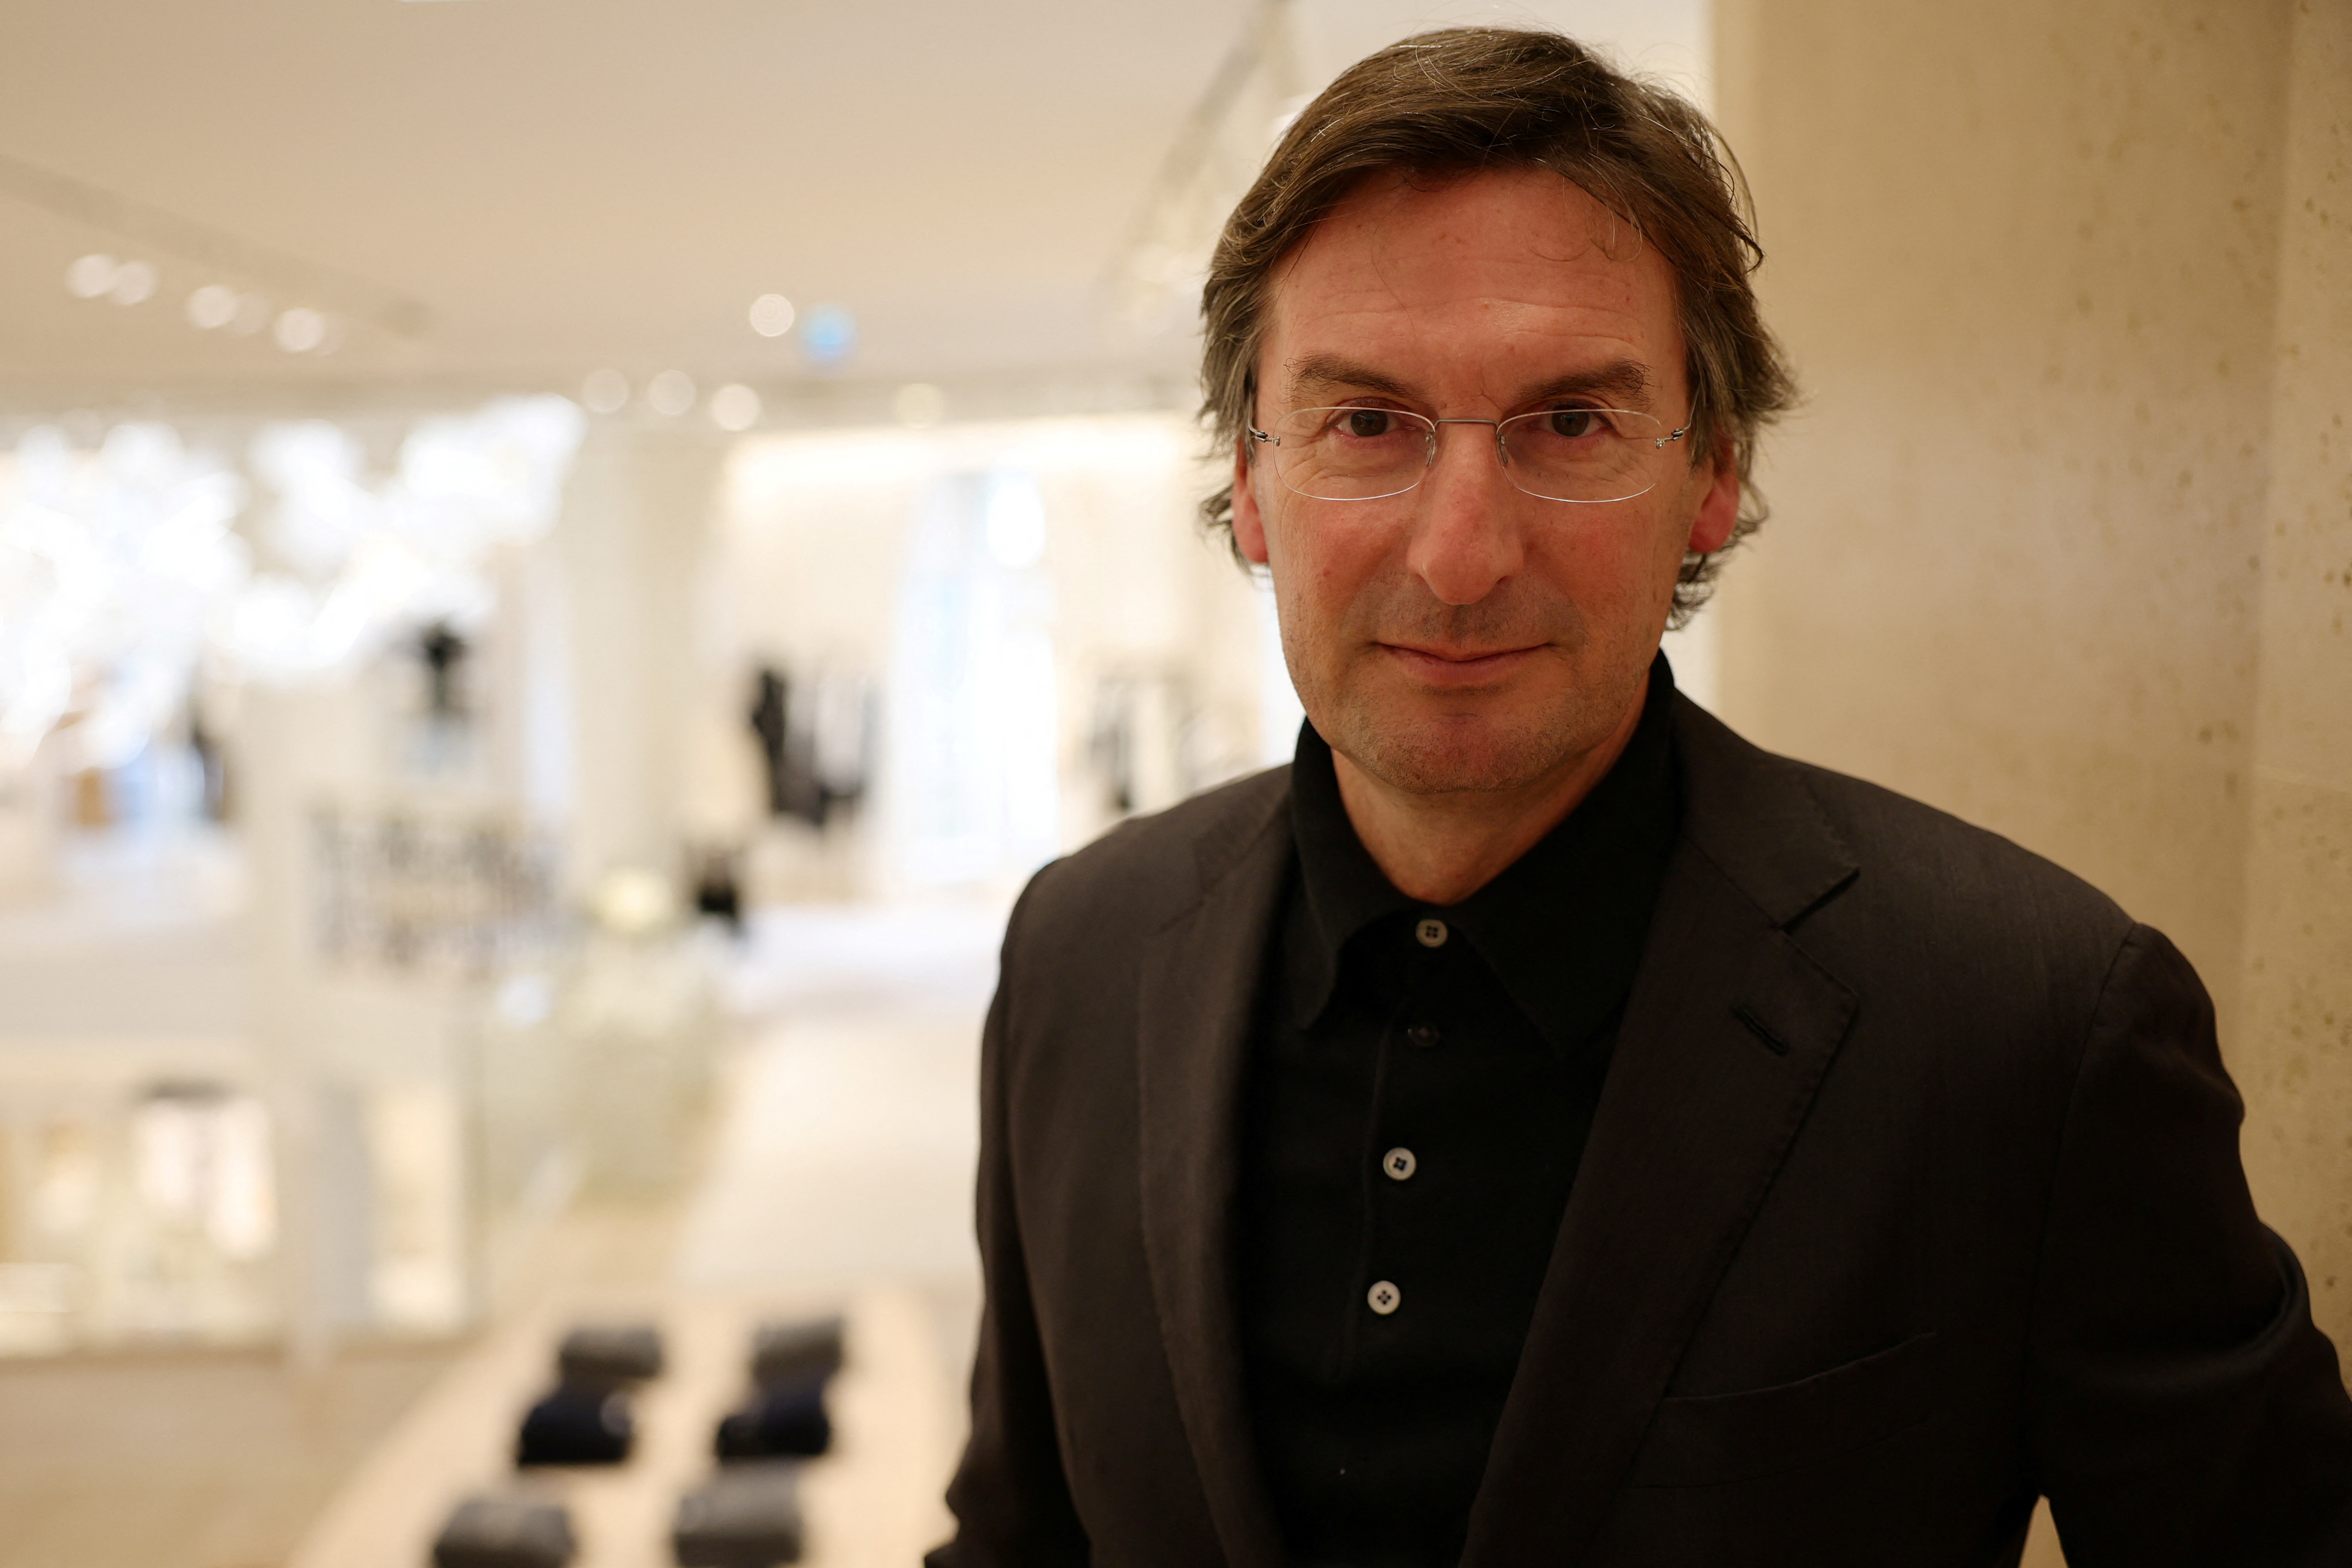 Paris' Flagship Dior Boutique Reopens Alongside New Dior Museum